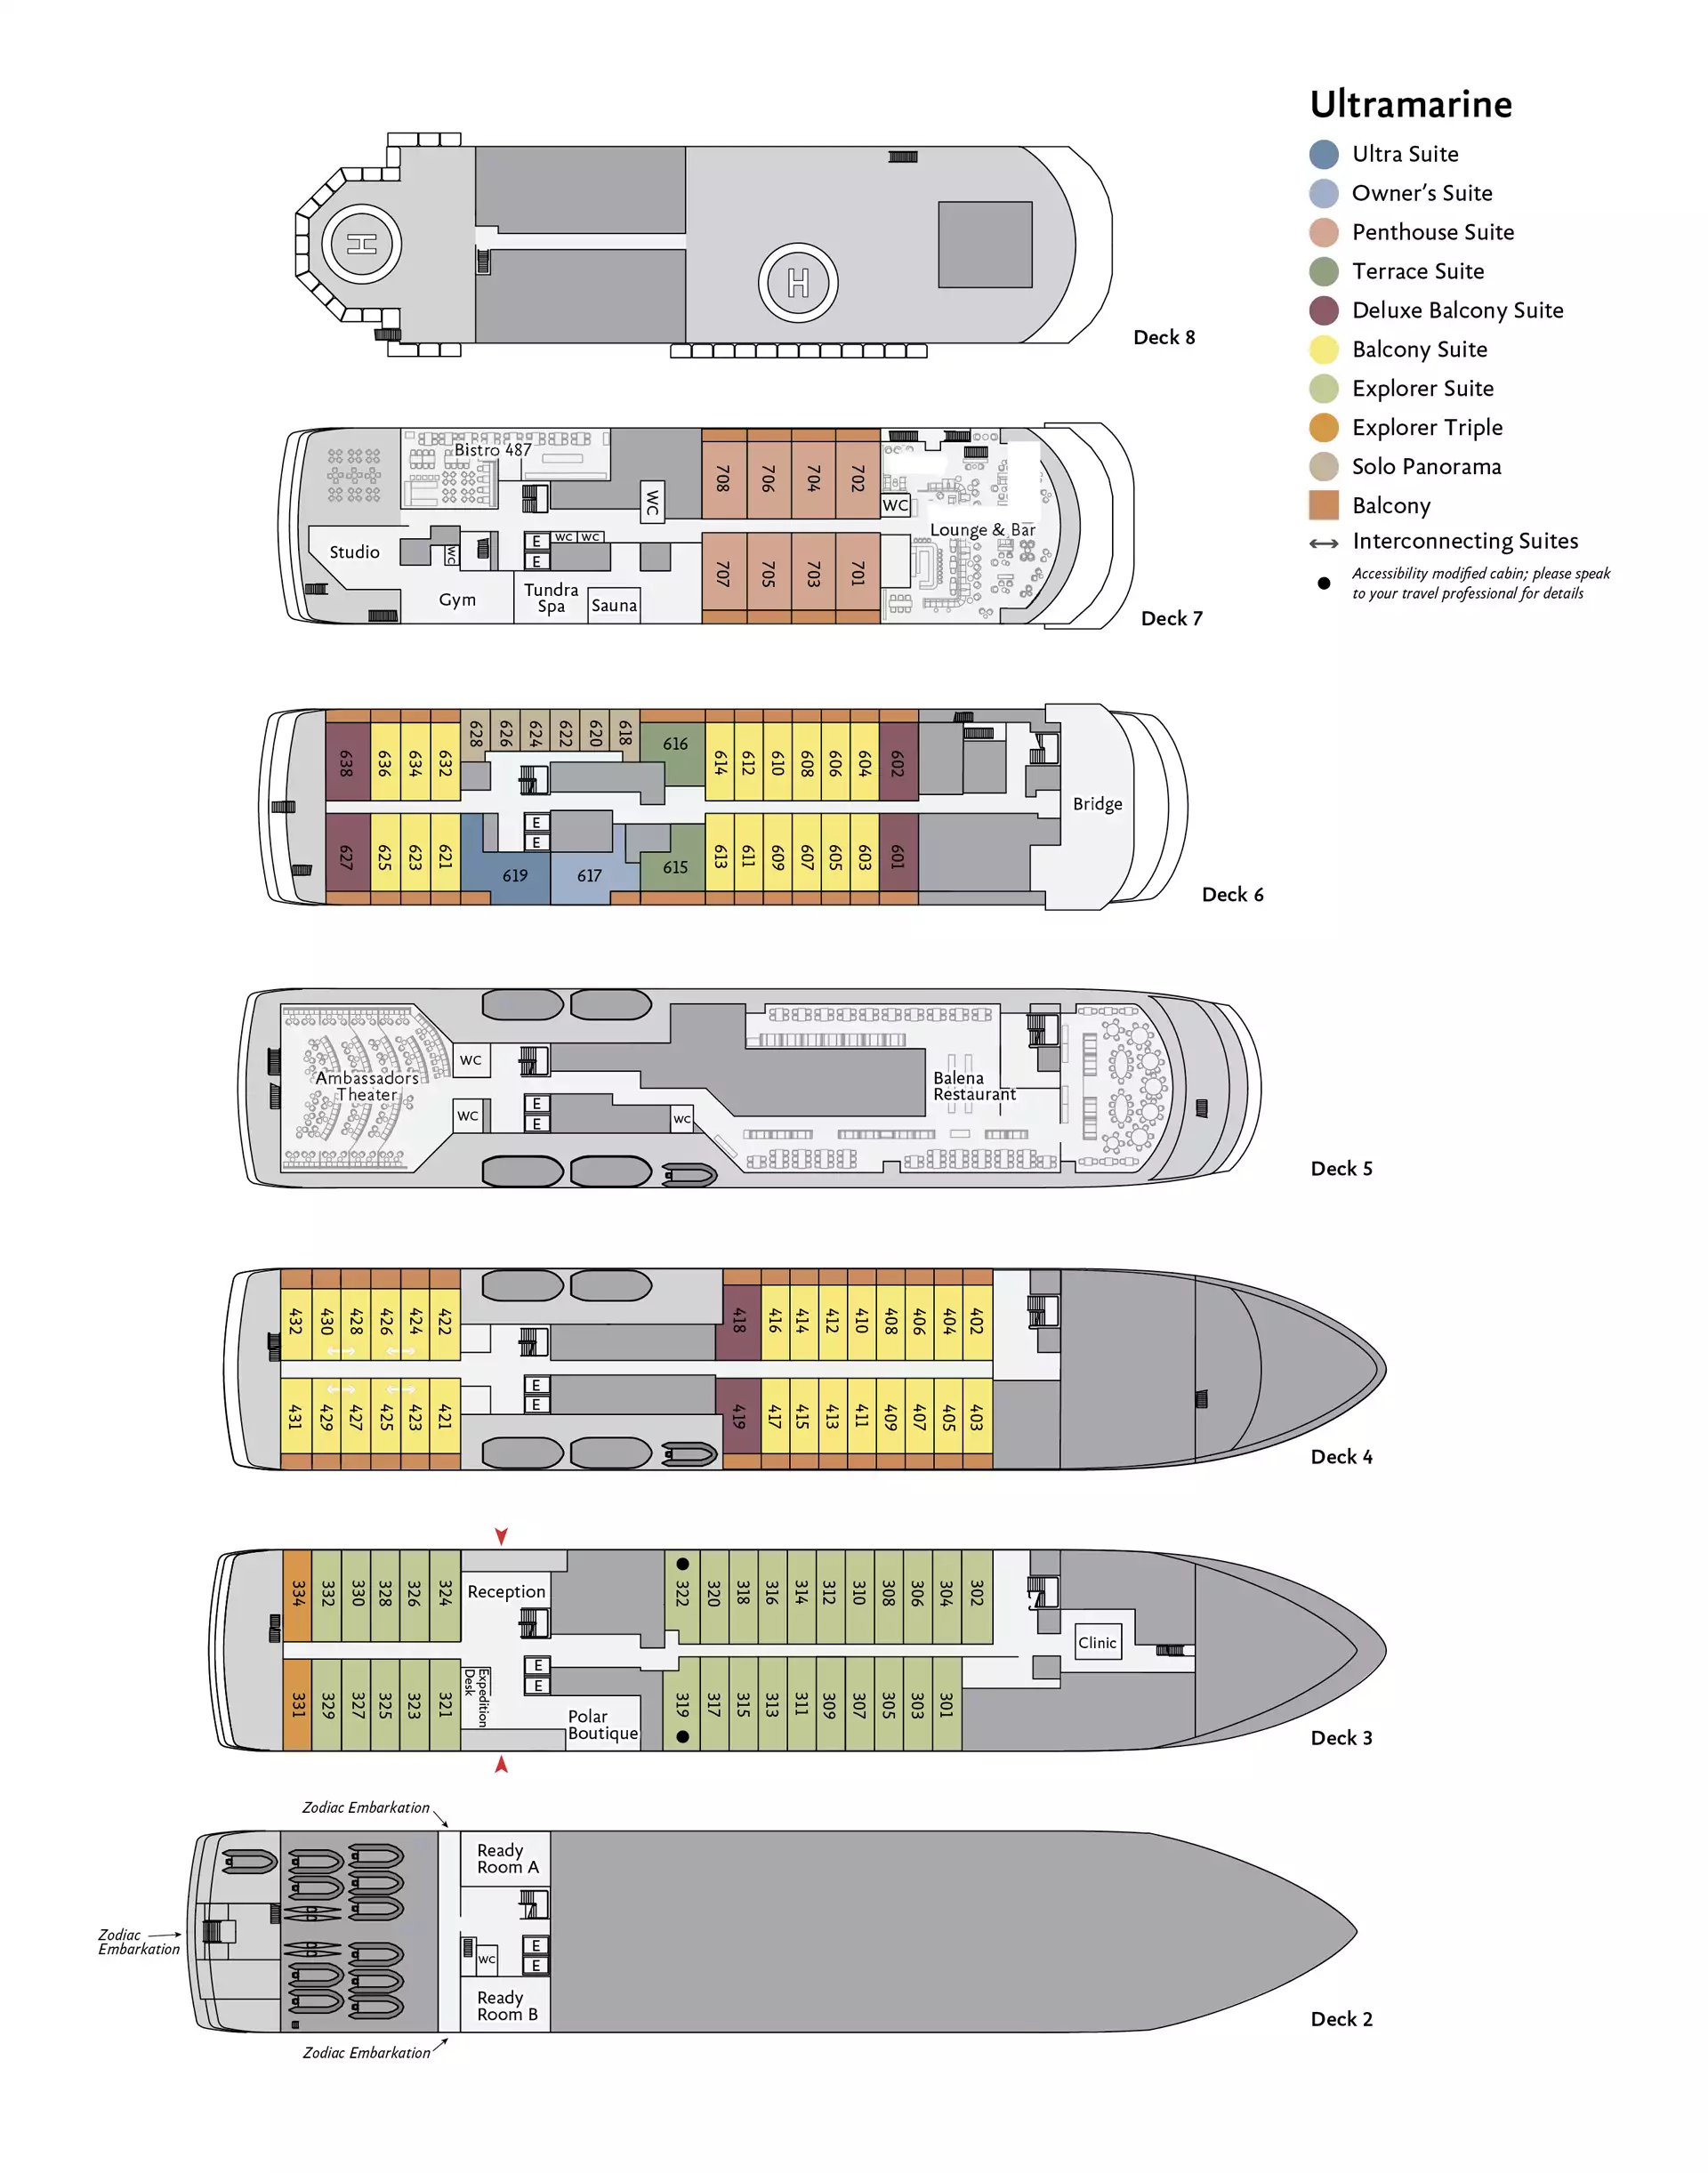 Deck plan of Ultramarine polar vessel showing 103 cabins & 7 decks.